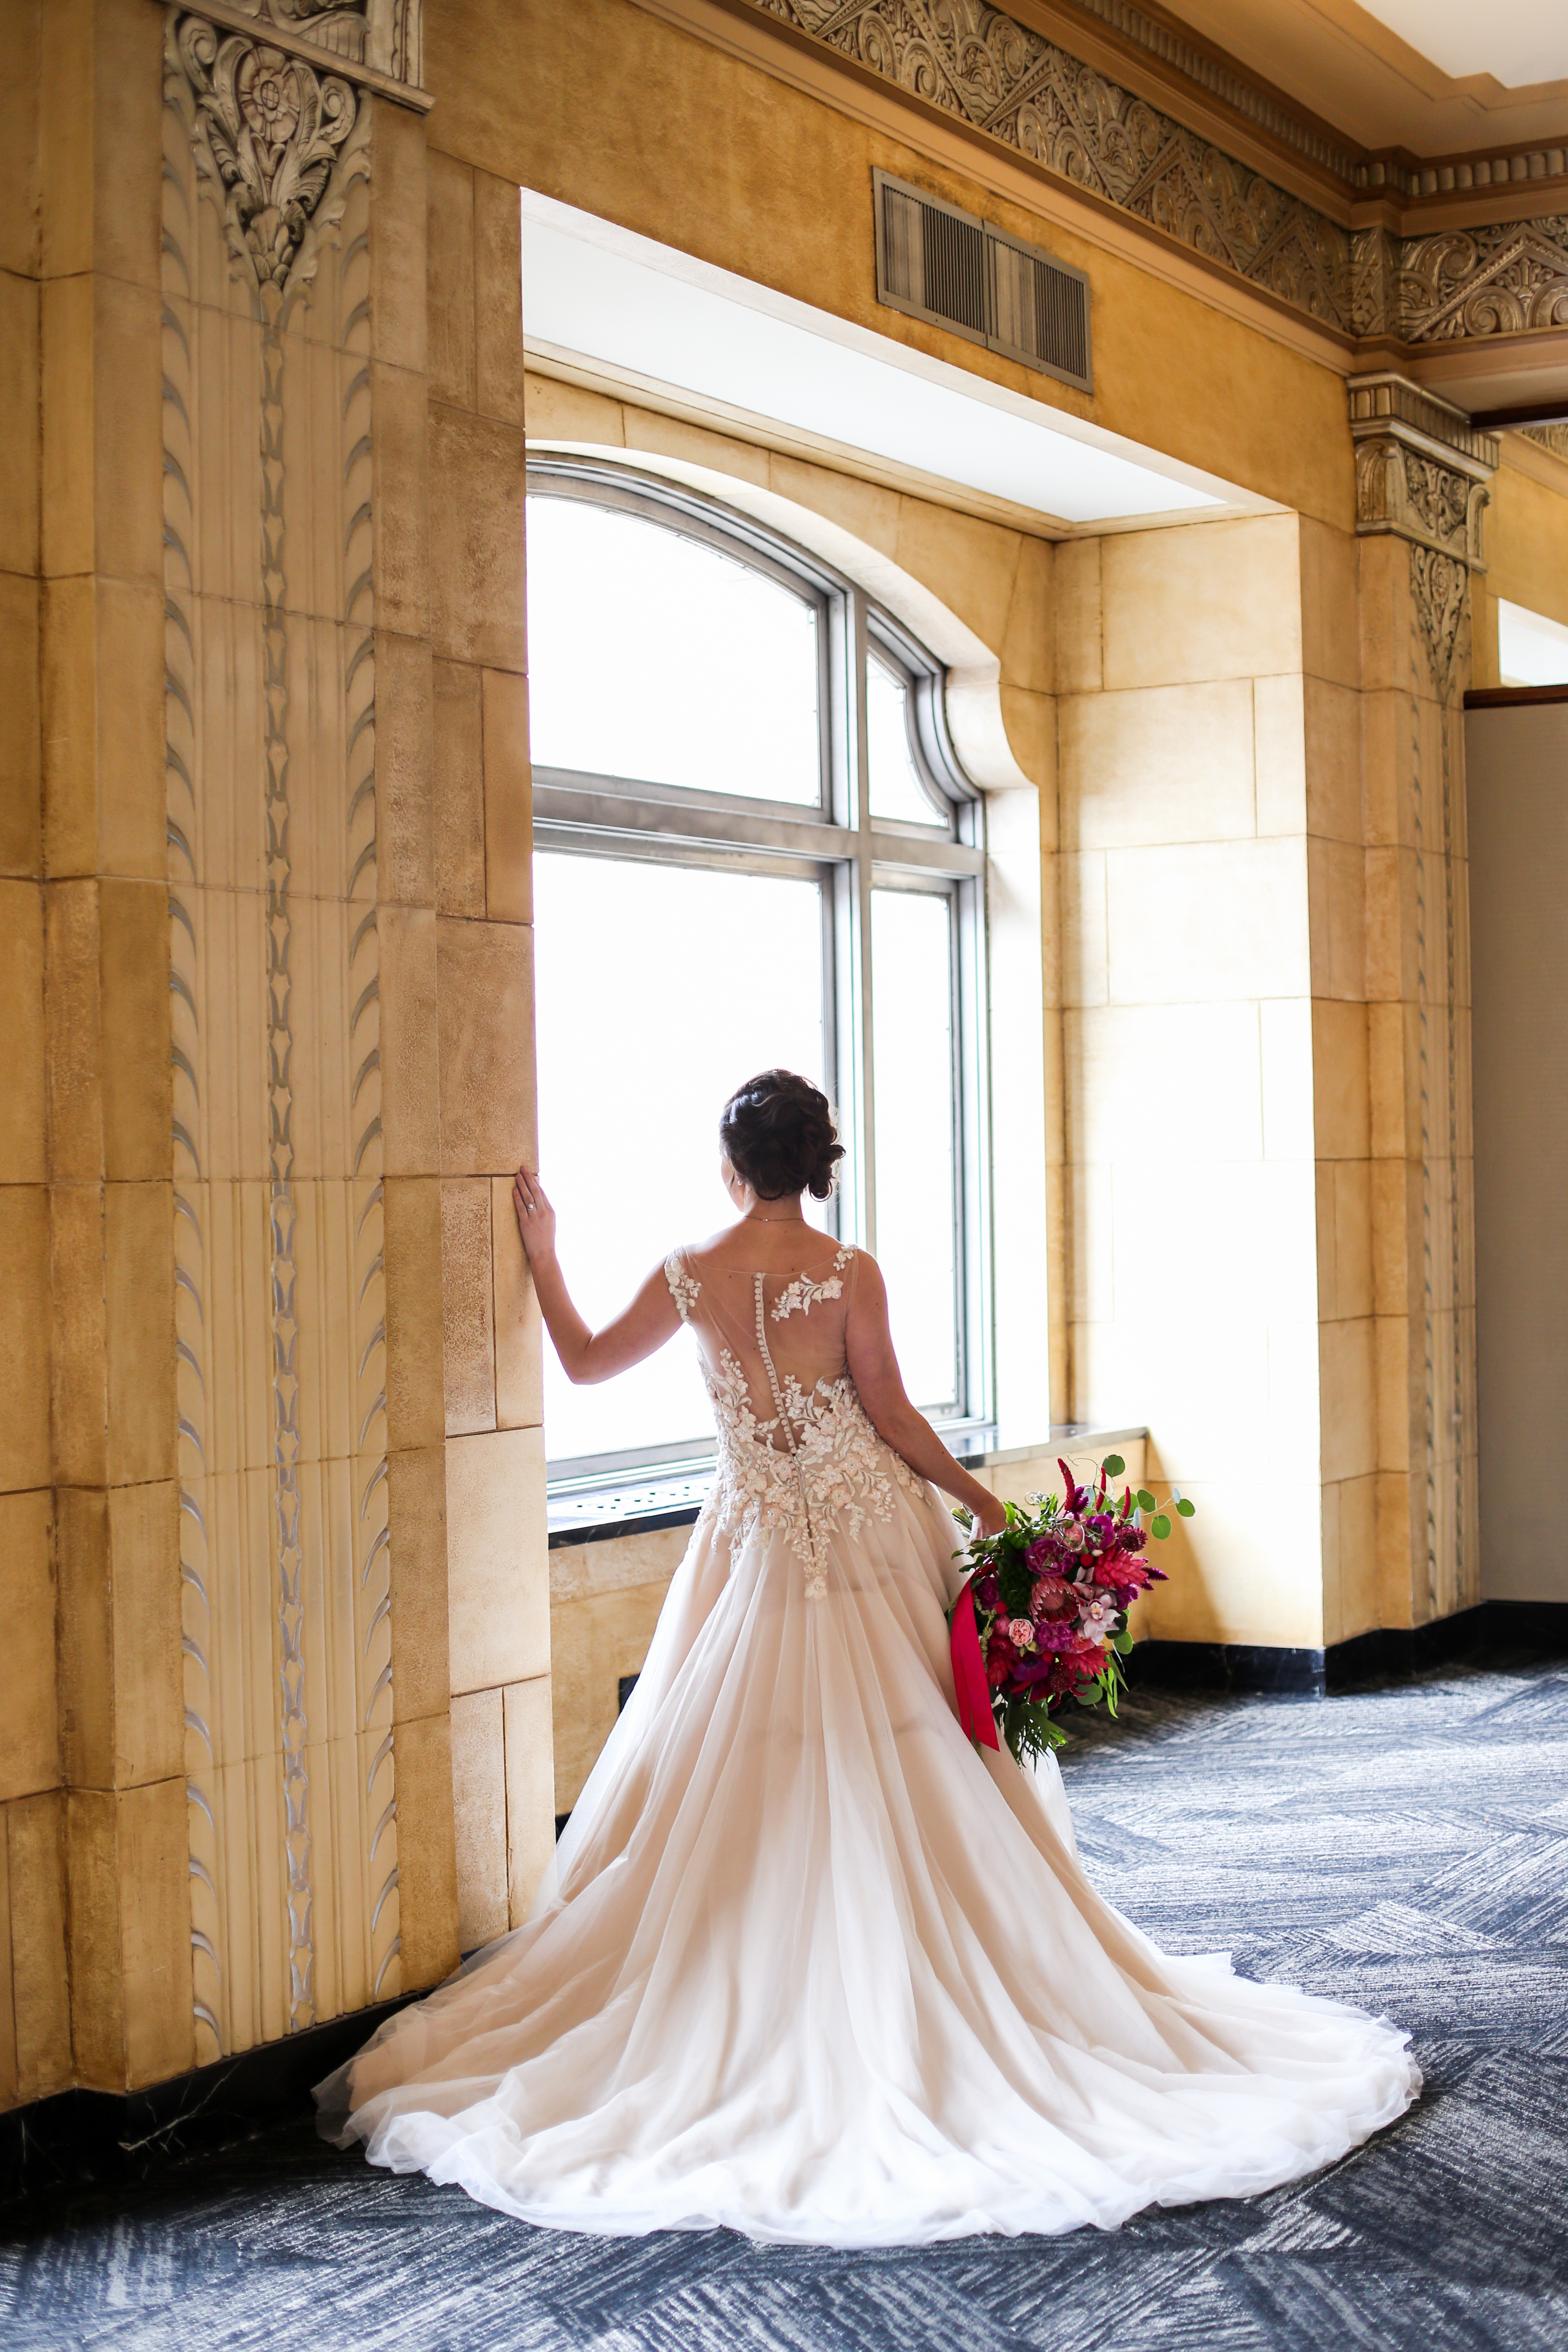 Beautiful Elegant Wedding Dress Full Length  at the Grand Hall wedding venue in kansas city - Best Wedding Photographer - Kansas City Portrait & Wedding Photography - Mariam Saifan